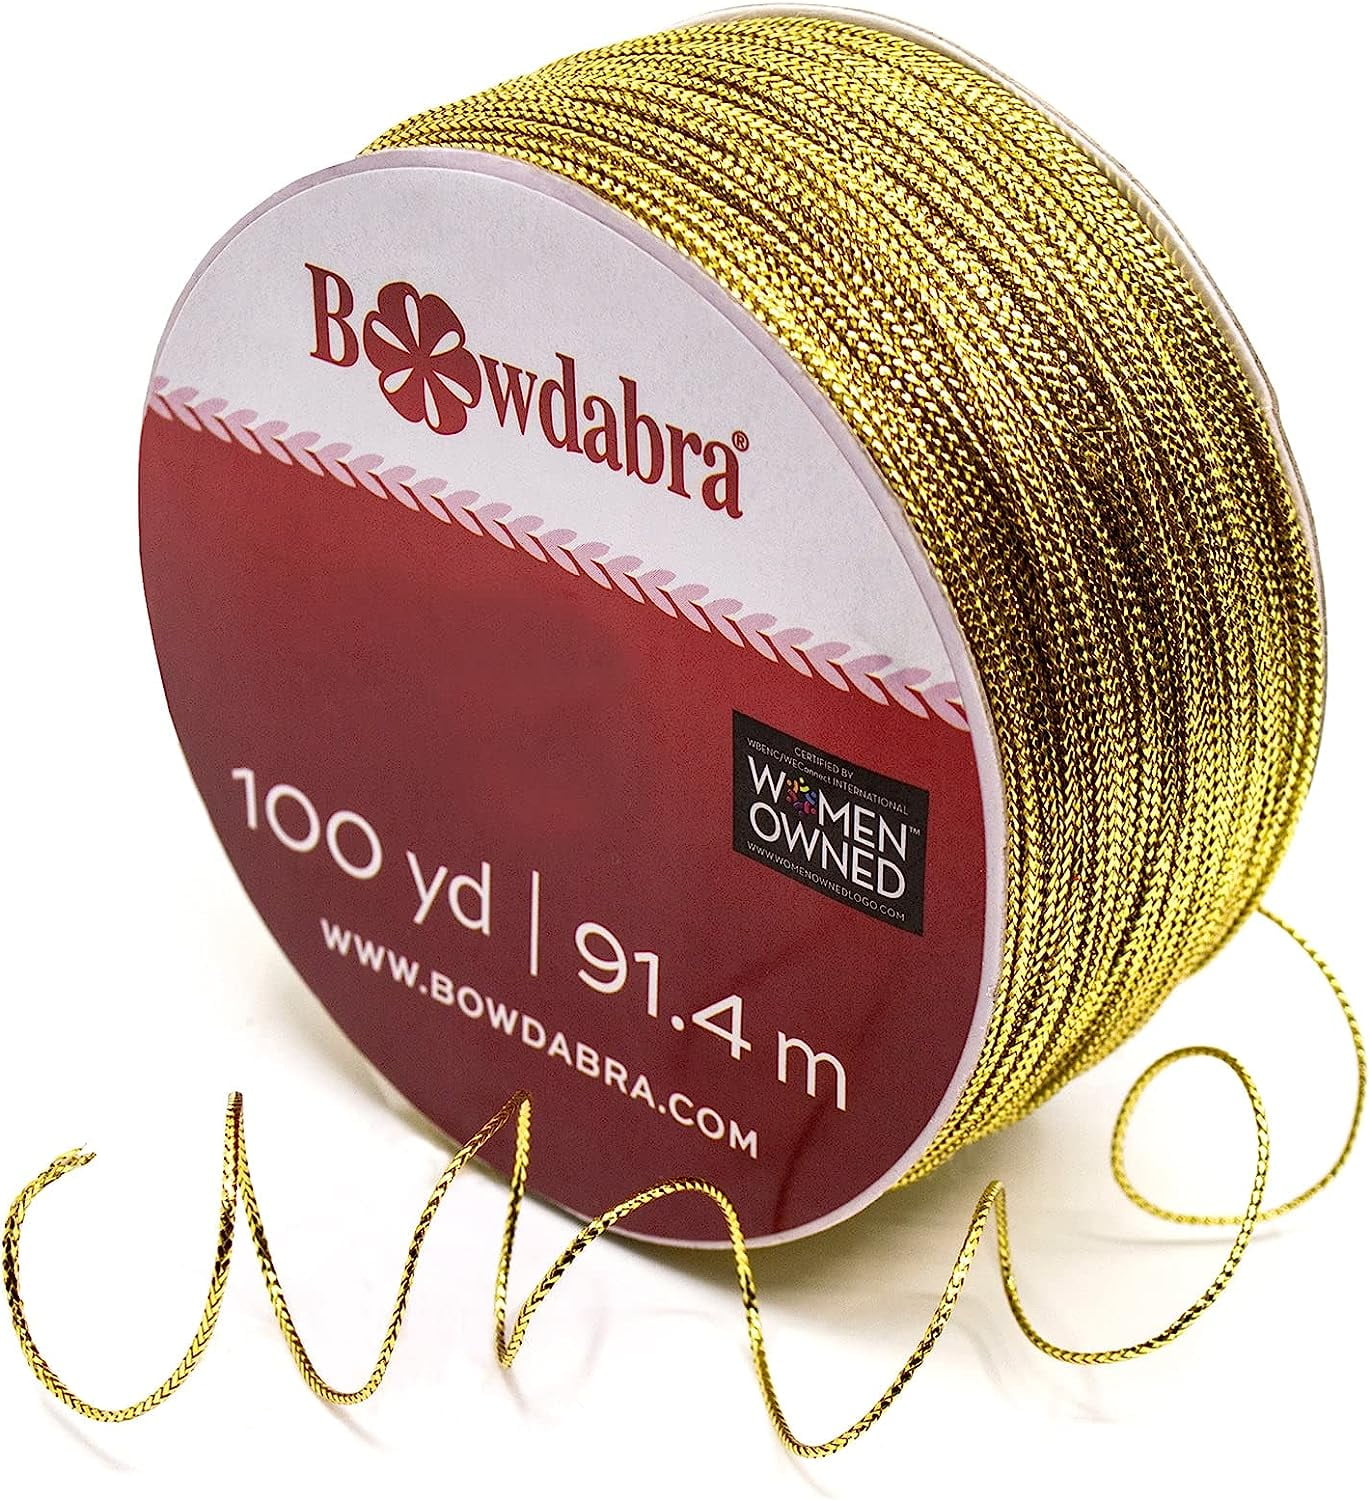 Bowdabra Bow Maker - Morex Ribbon - The More Exclusive Ribbon Company